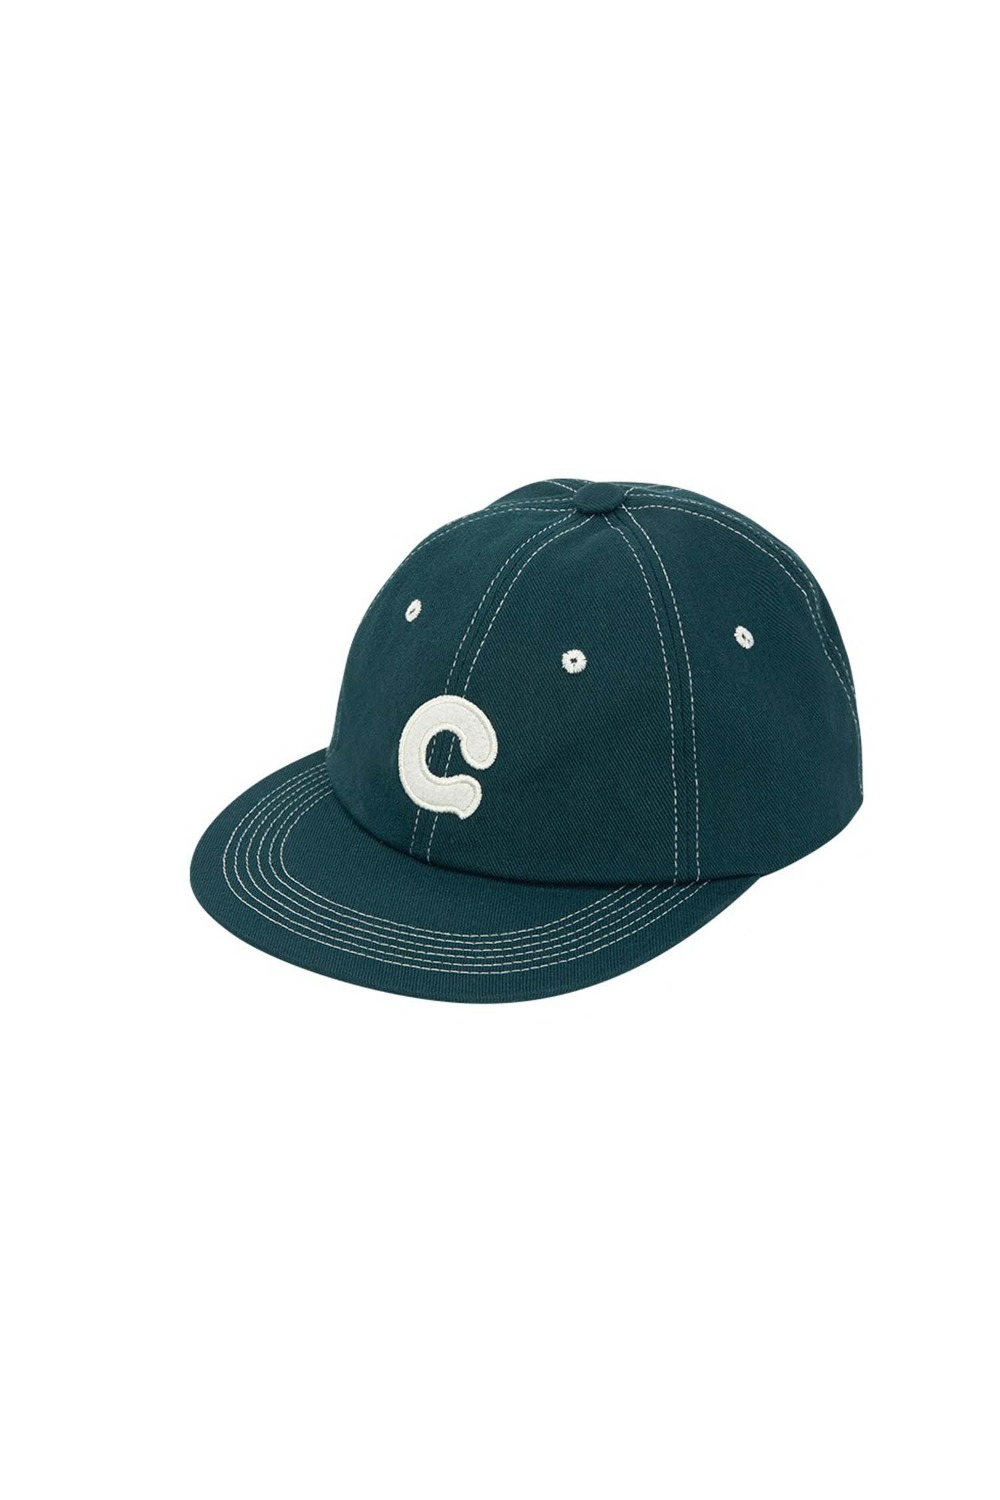 CONTRAST STITCH BALL CAP (GREEN) RICHEZ